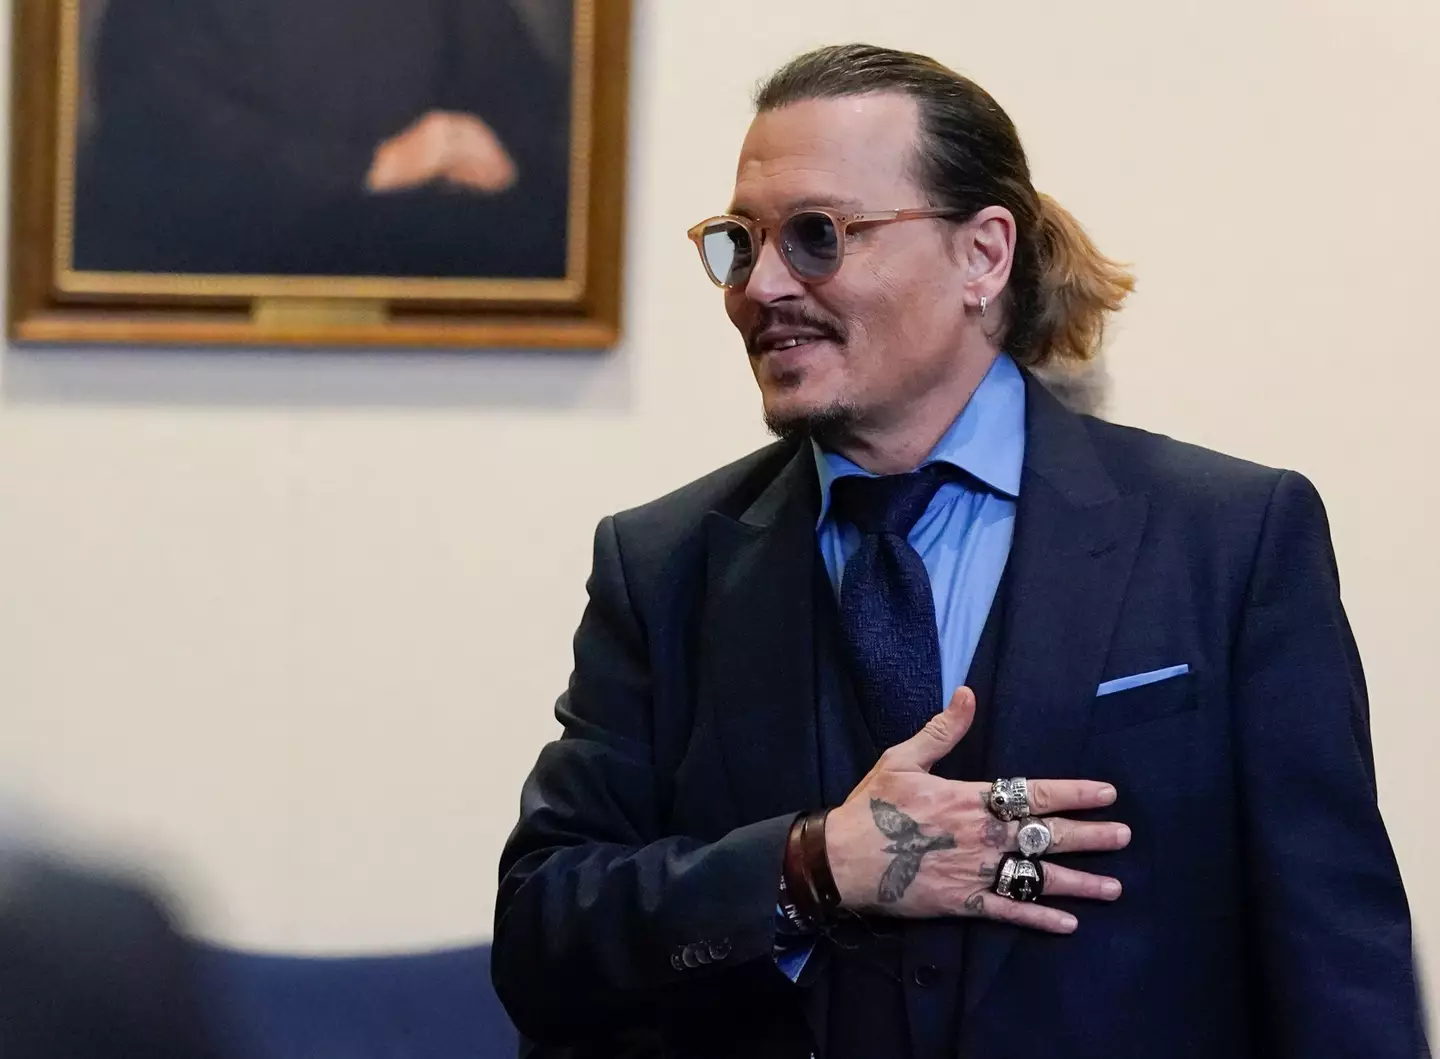 Johnny Depp won his defamation lawsuit against Amber Heard.